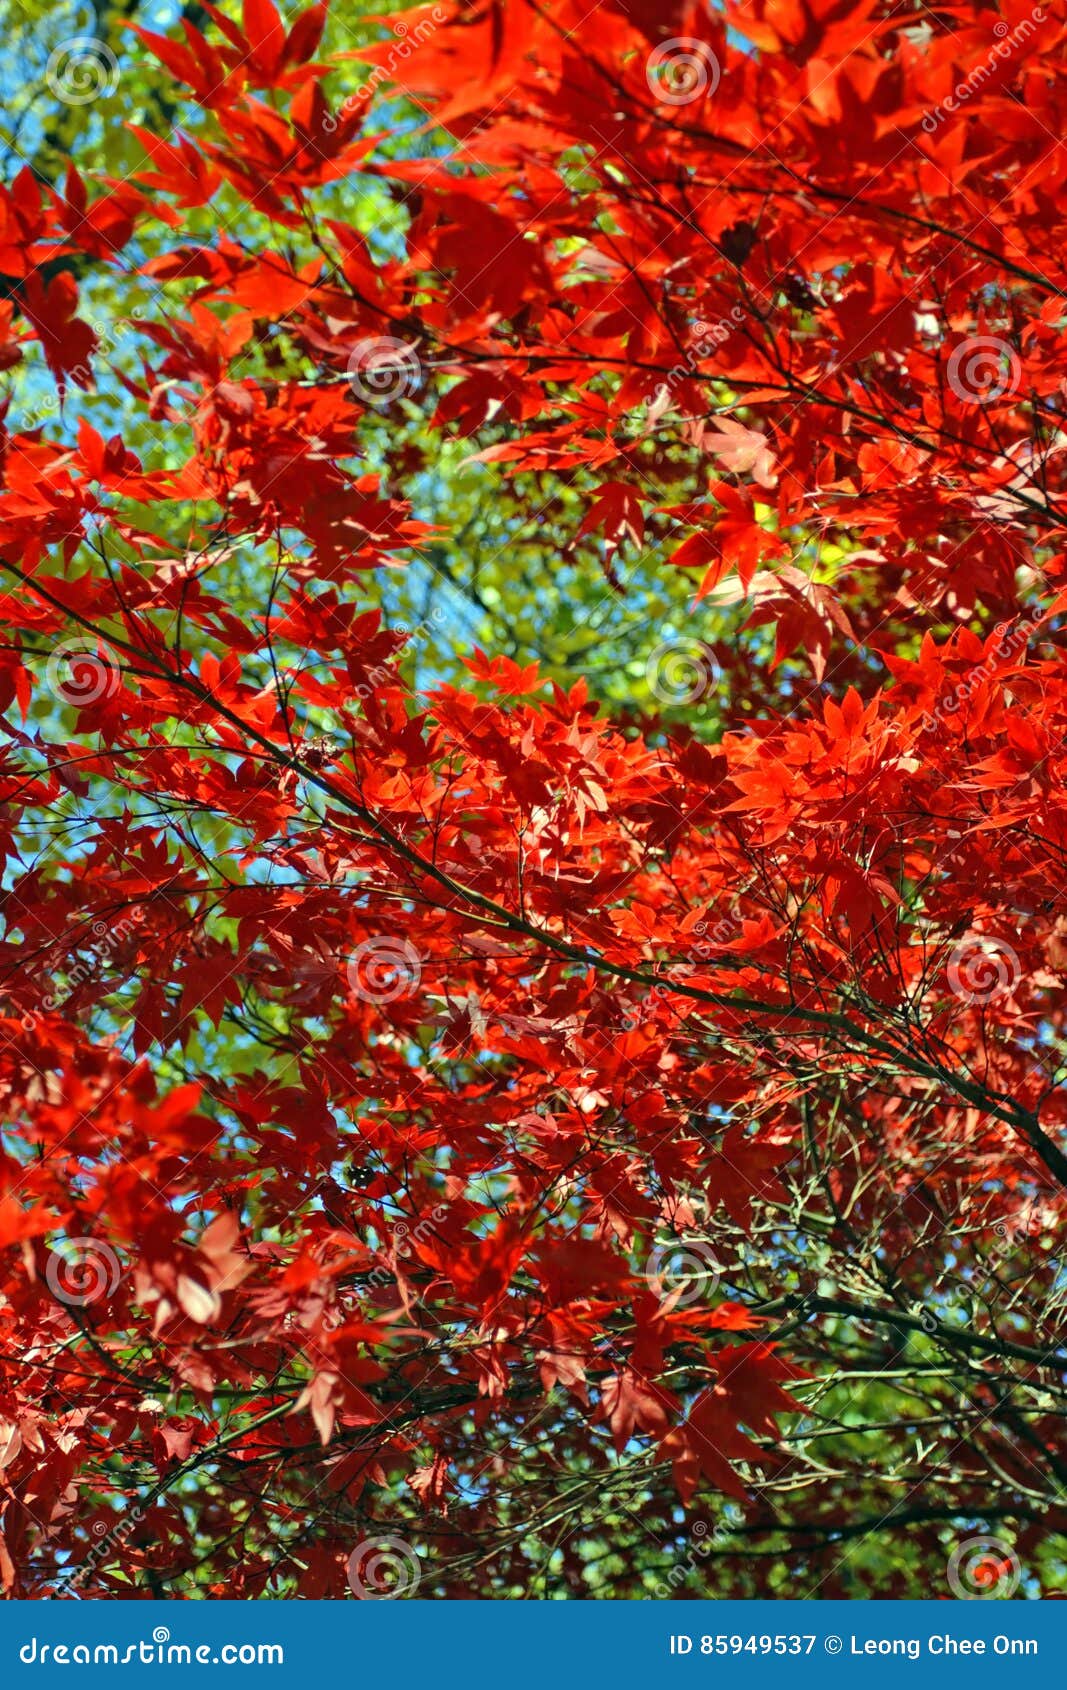 Stock Image Of Fall Foliage At Boston Stock Image Image Of Plant